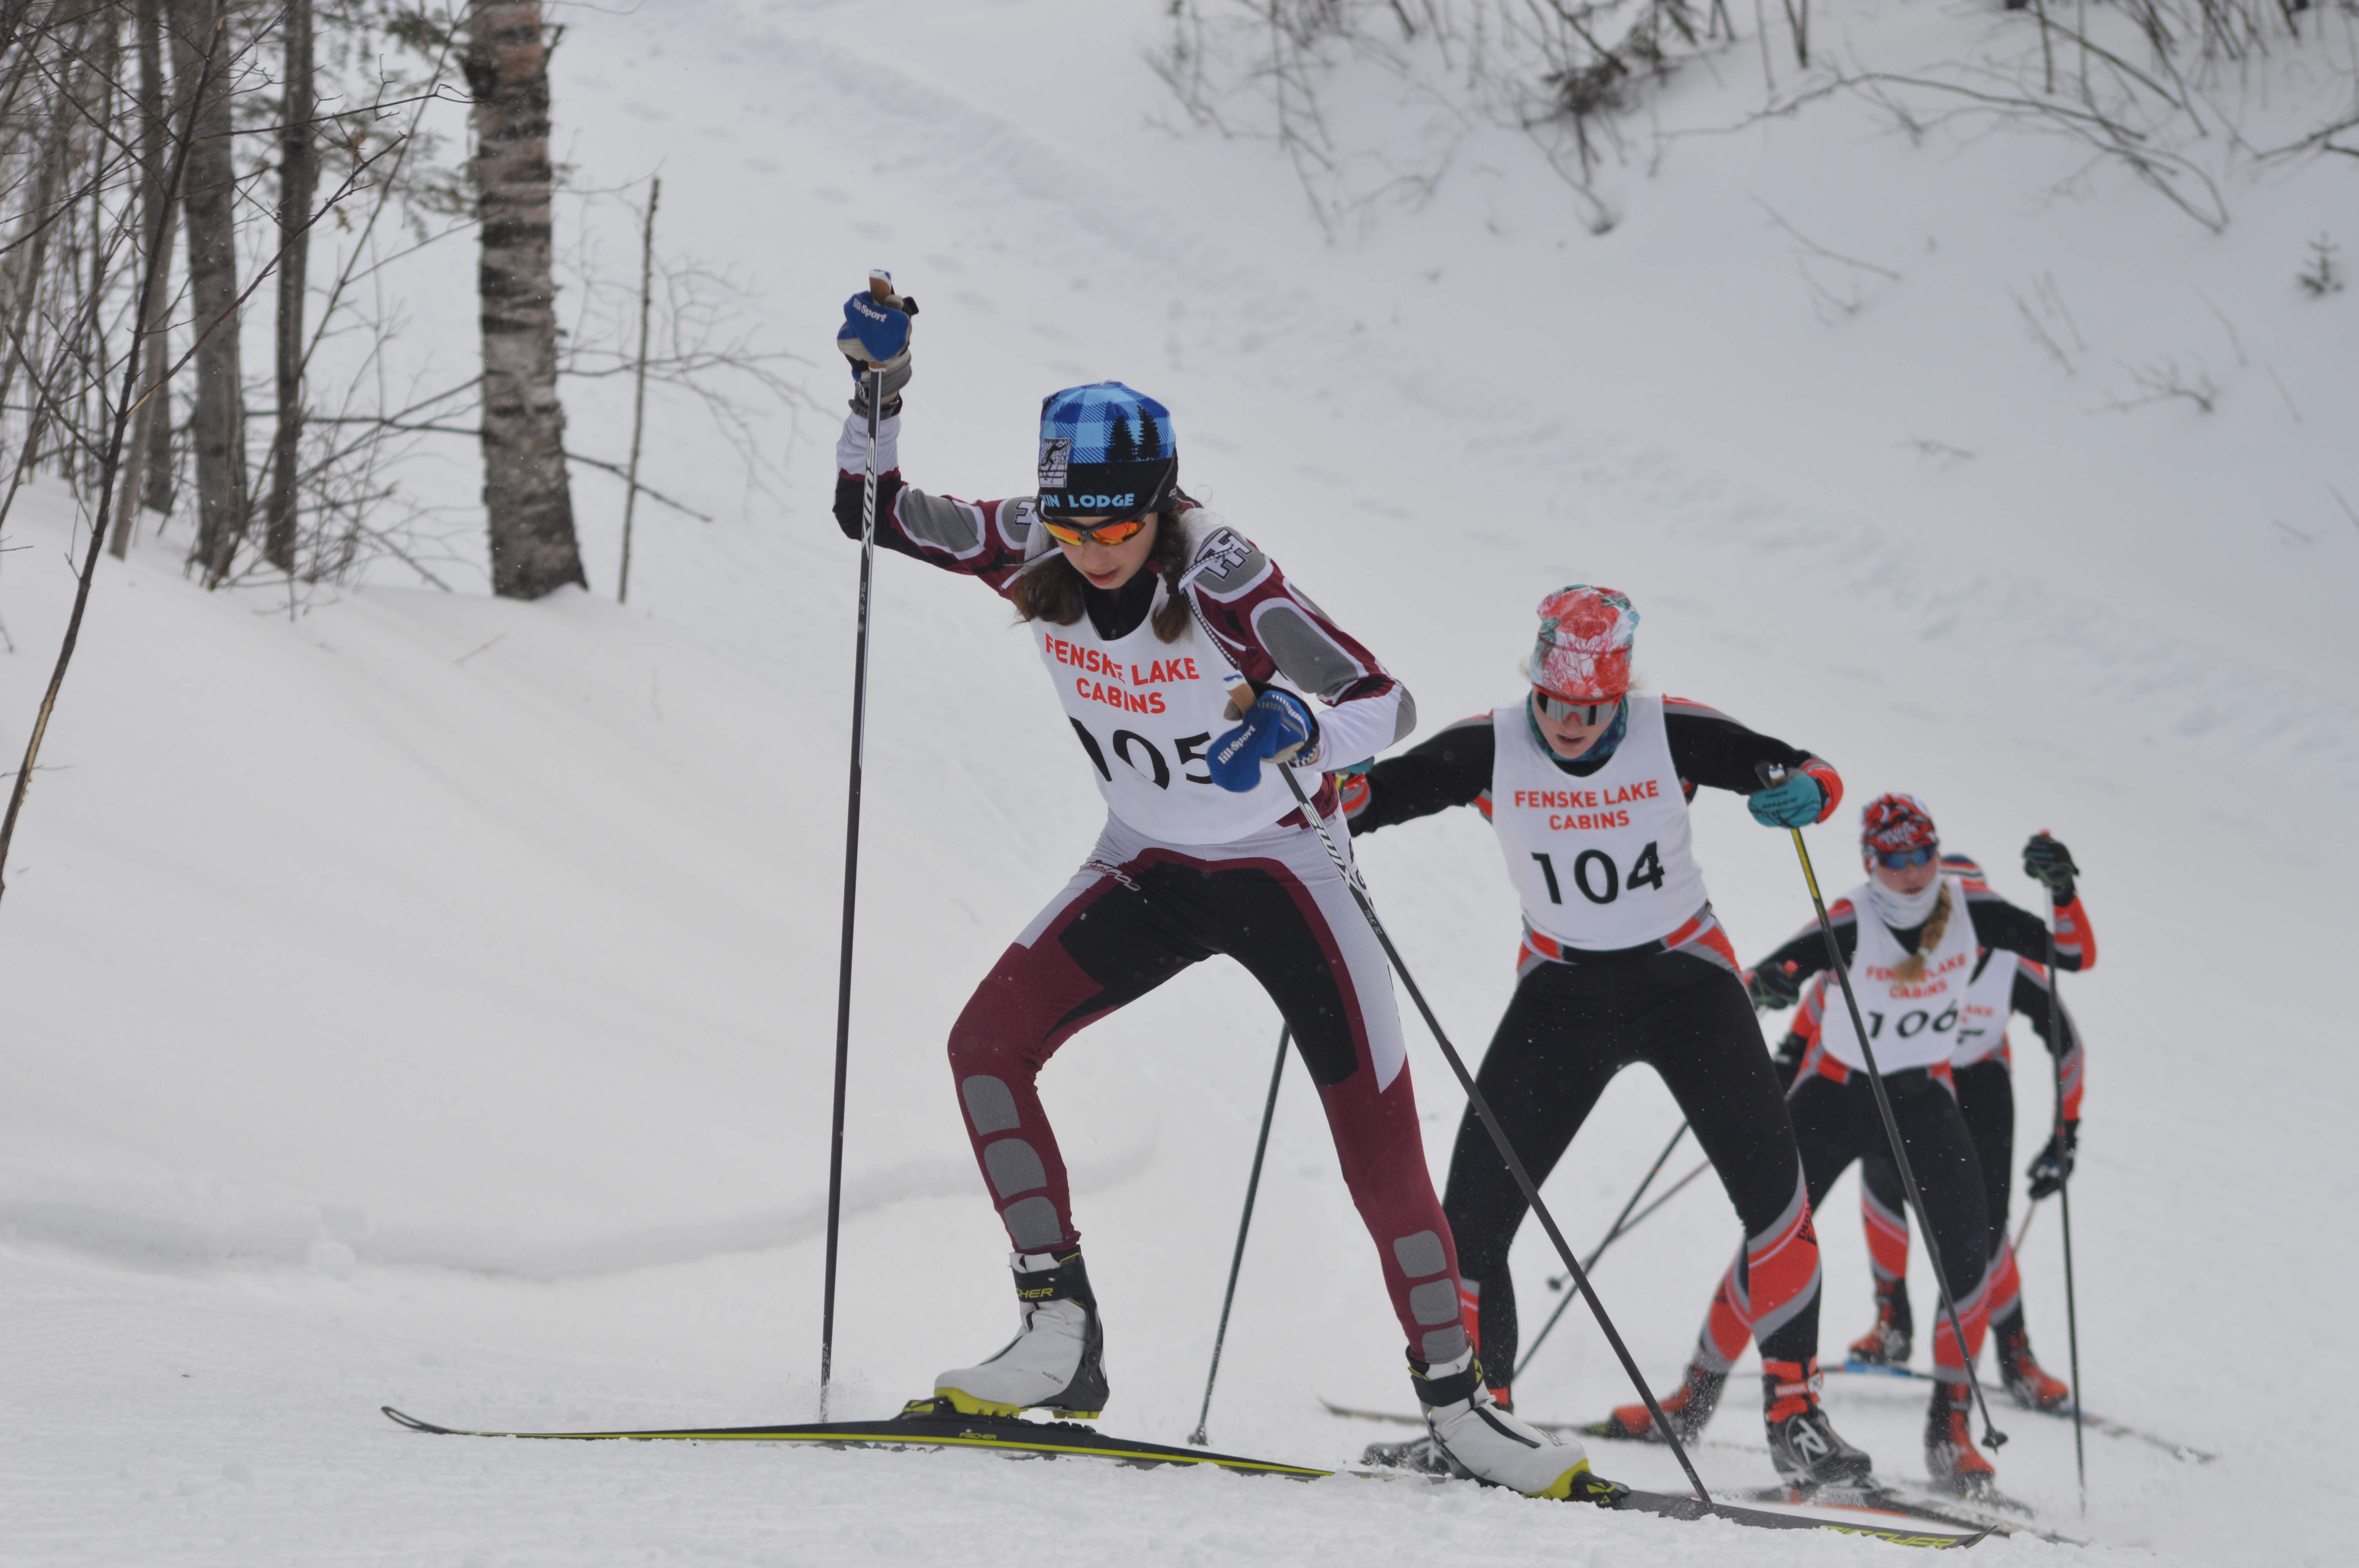 Three nordic skiers